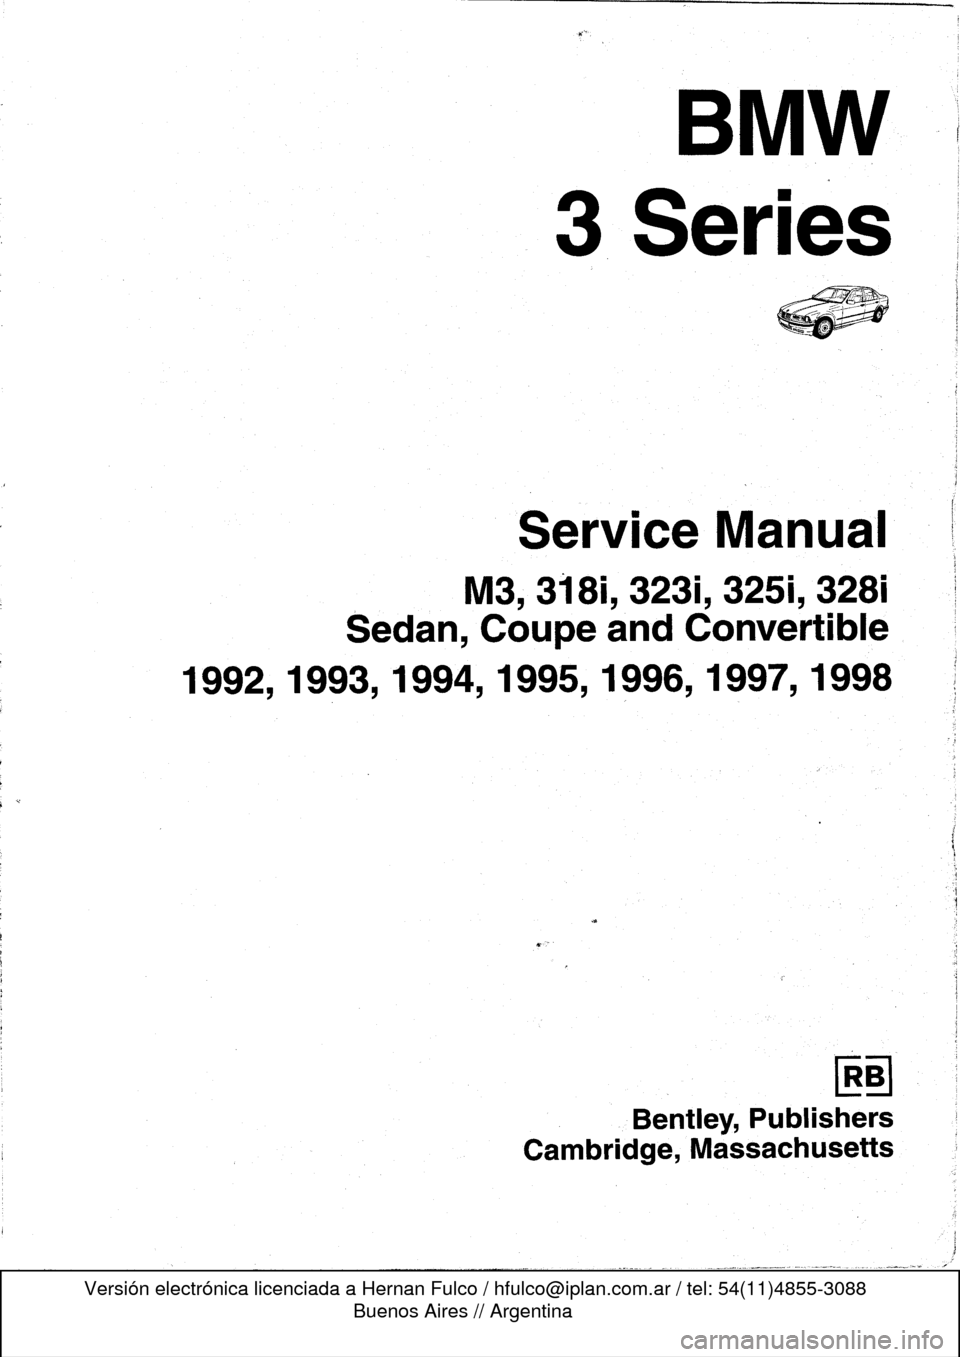 BMW 323i 1998 E36 Workshop Manual 
B
mw

3
Series

M3,
3181,3231,3251,
3281

Sedan,
Coupe
and
Convertible

1992,1993,1994,1995,
1996,1997,
1998

Bentley,
Publishers

Cambridge,
Massachusetts 